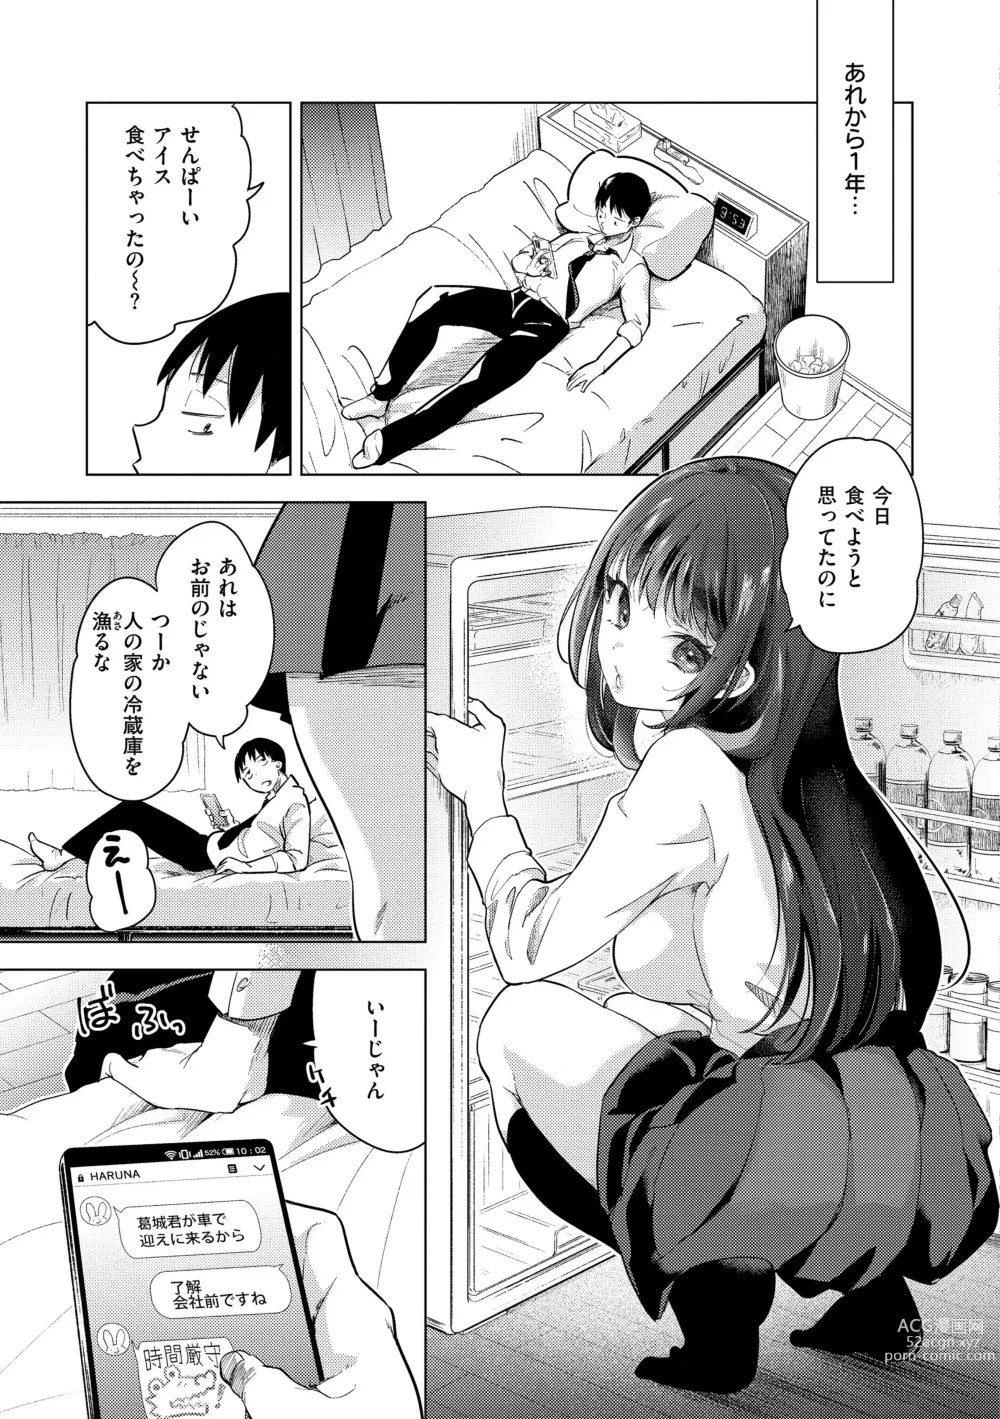 Page 5 of manga Koishite Furete - Loving and Touching